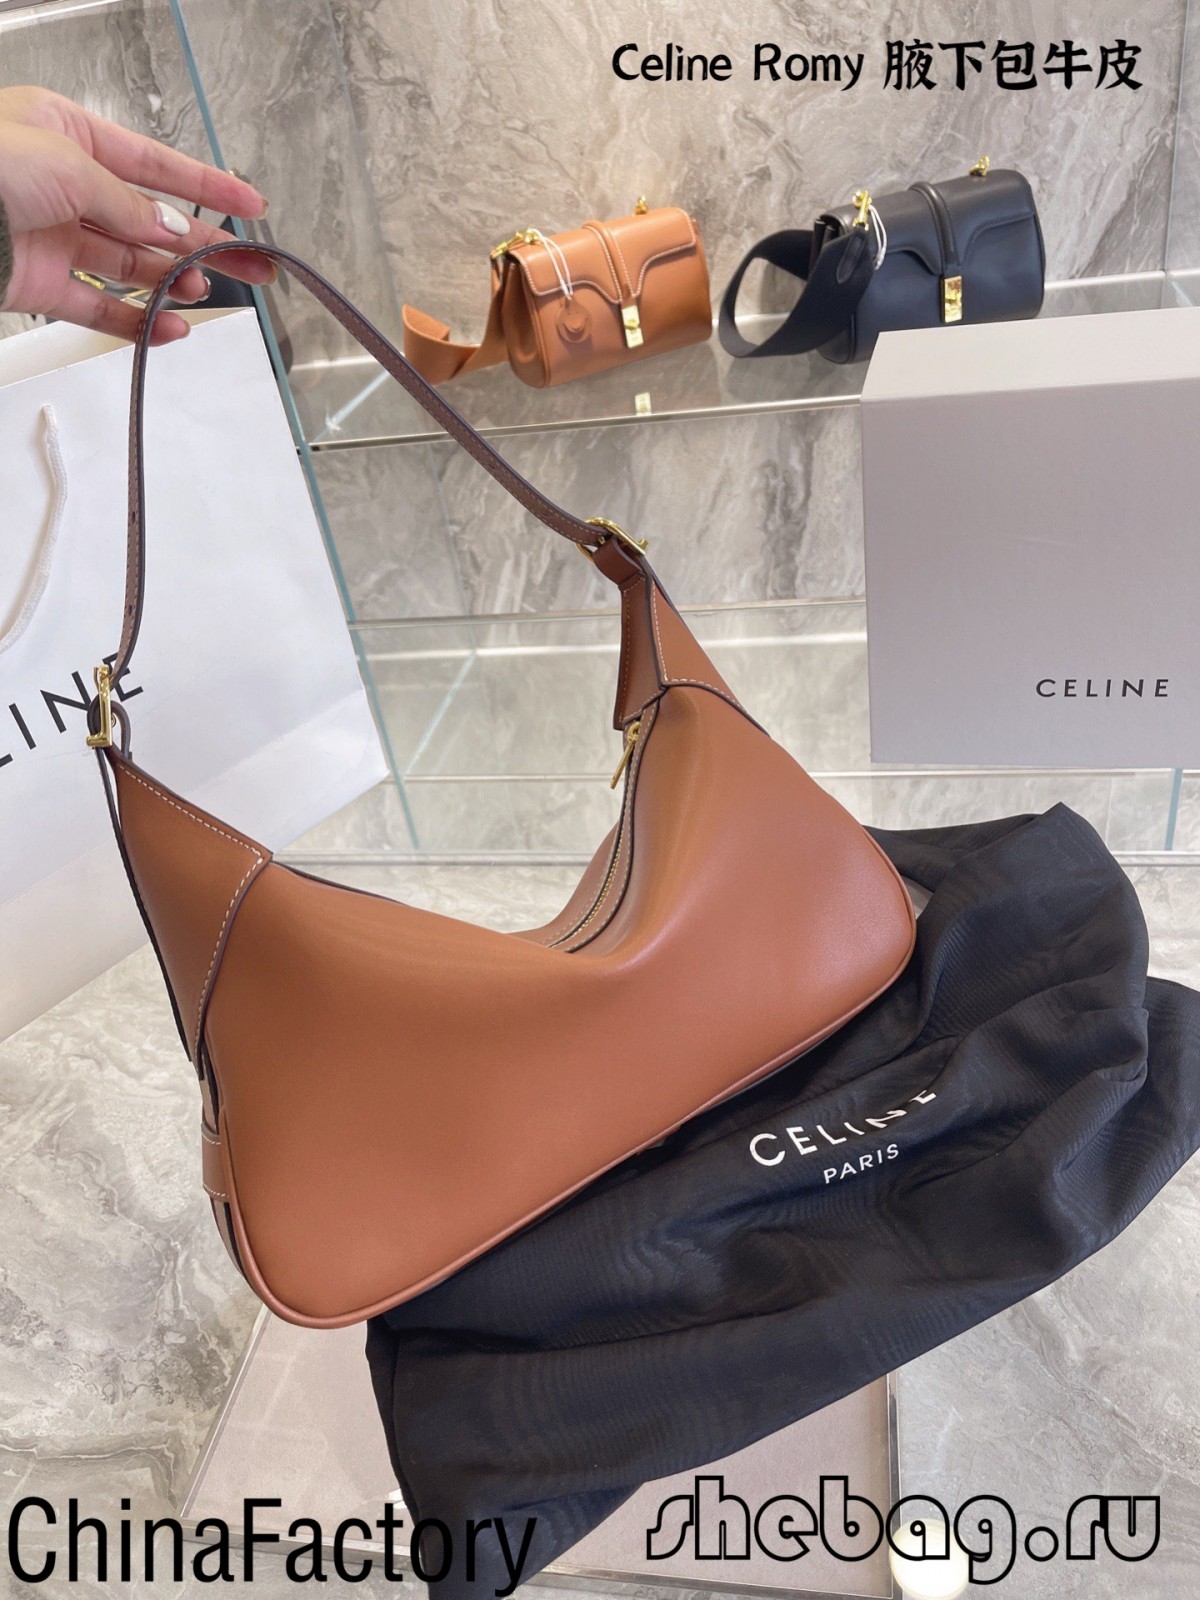 Best replica celine bags reviews: Celine Romy (2022 edition)-Best Quality Fake Louis Vuitton Bag Online Store, Replica designer bag ru